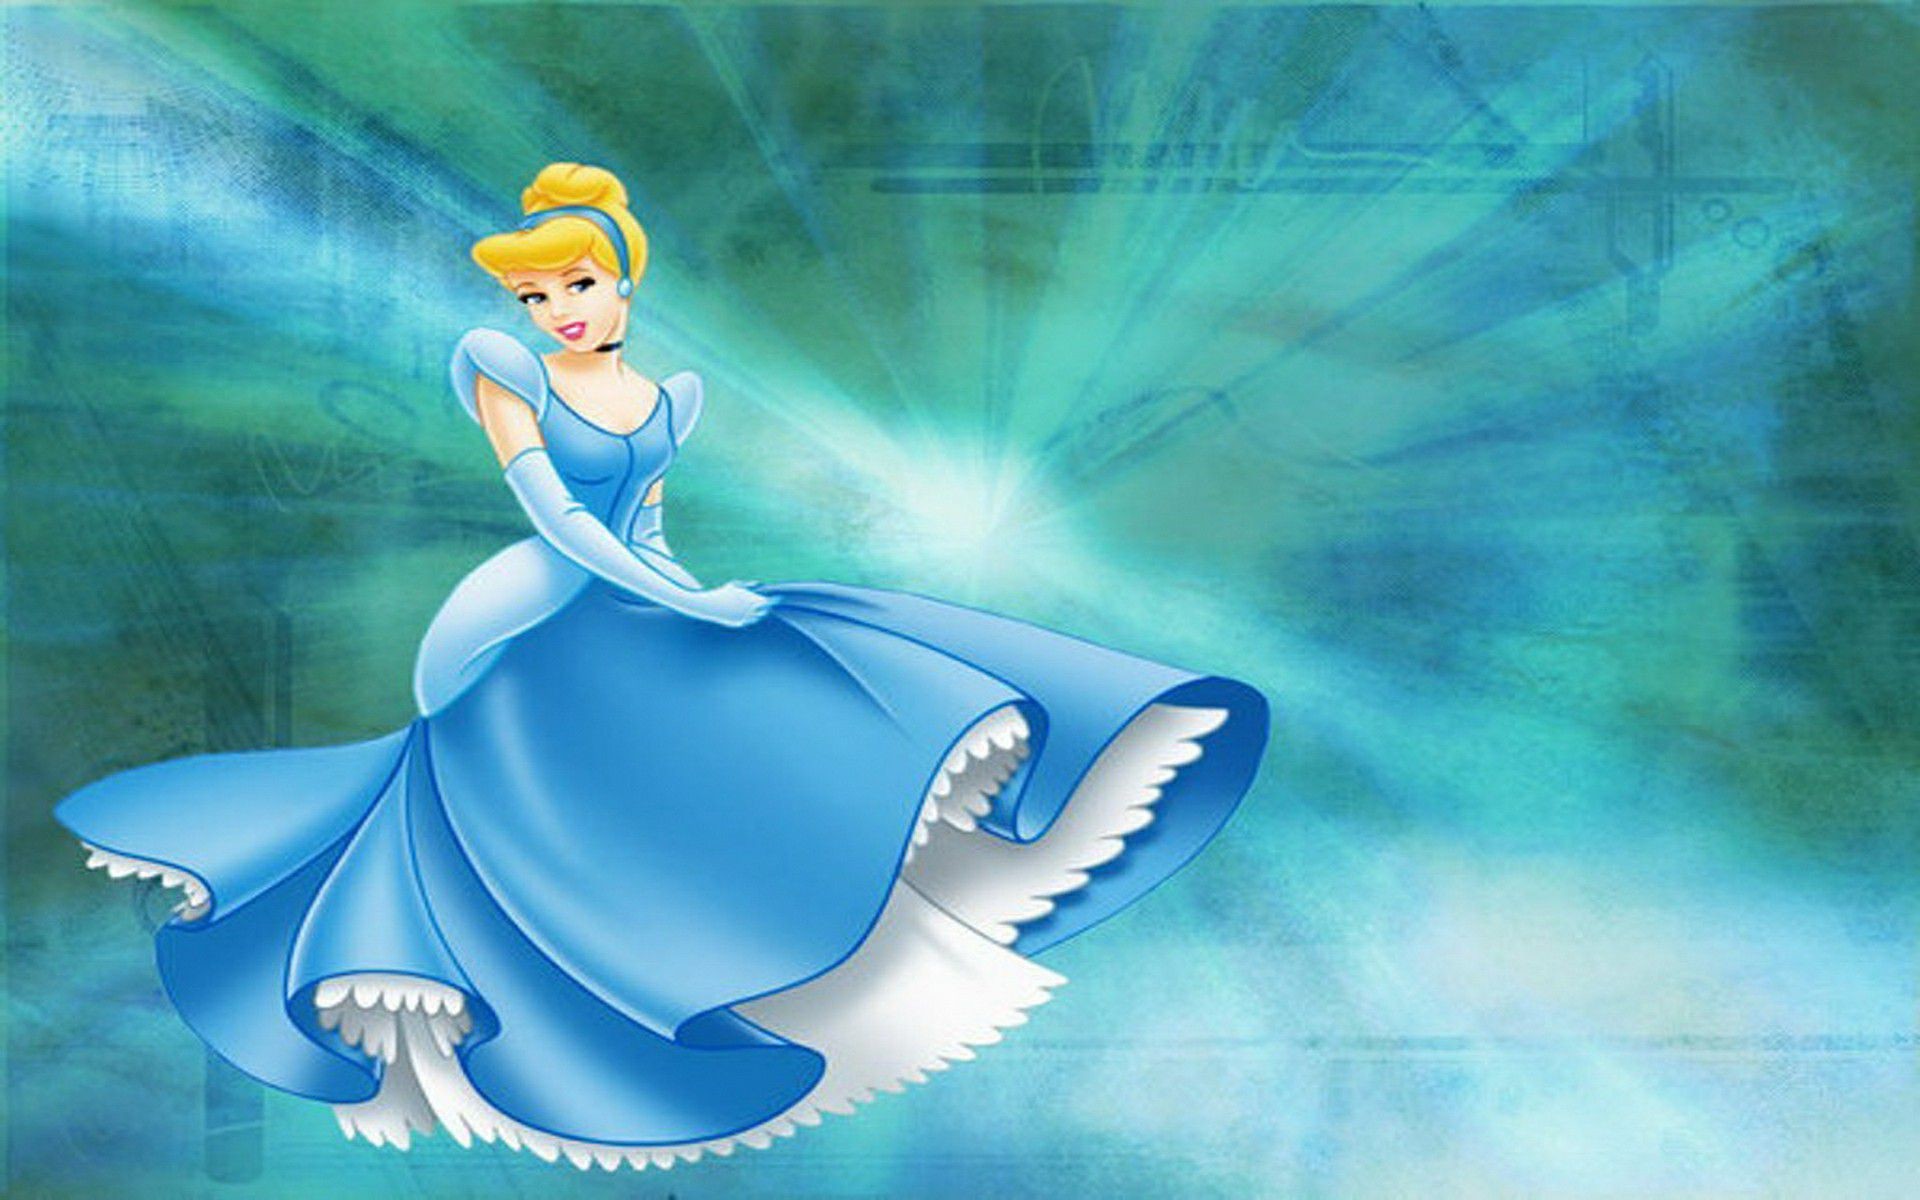 Cinderella  Midnight princess 4K wallpaper download